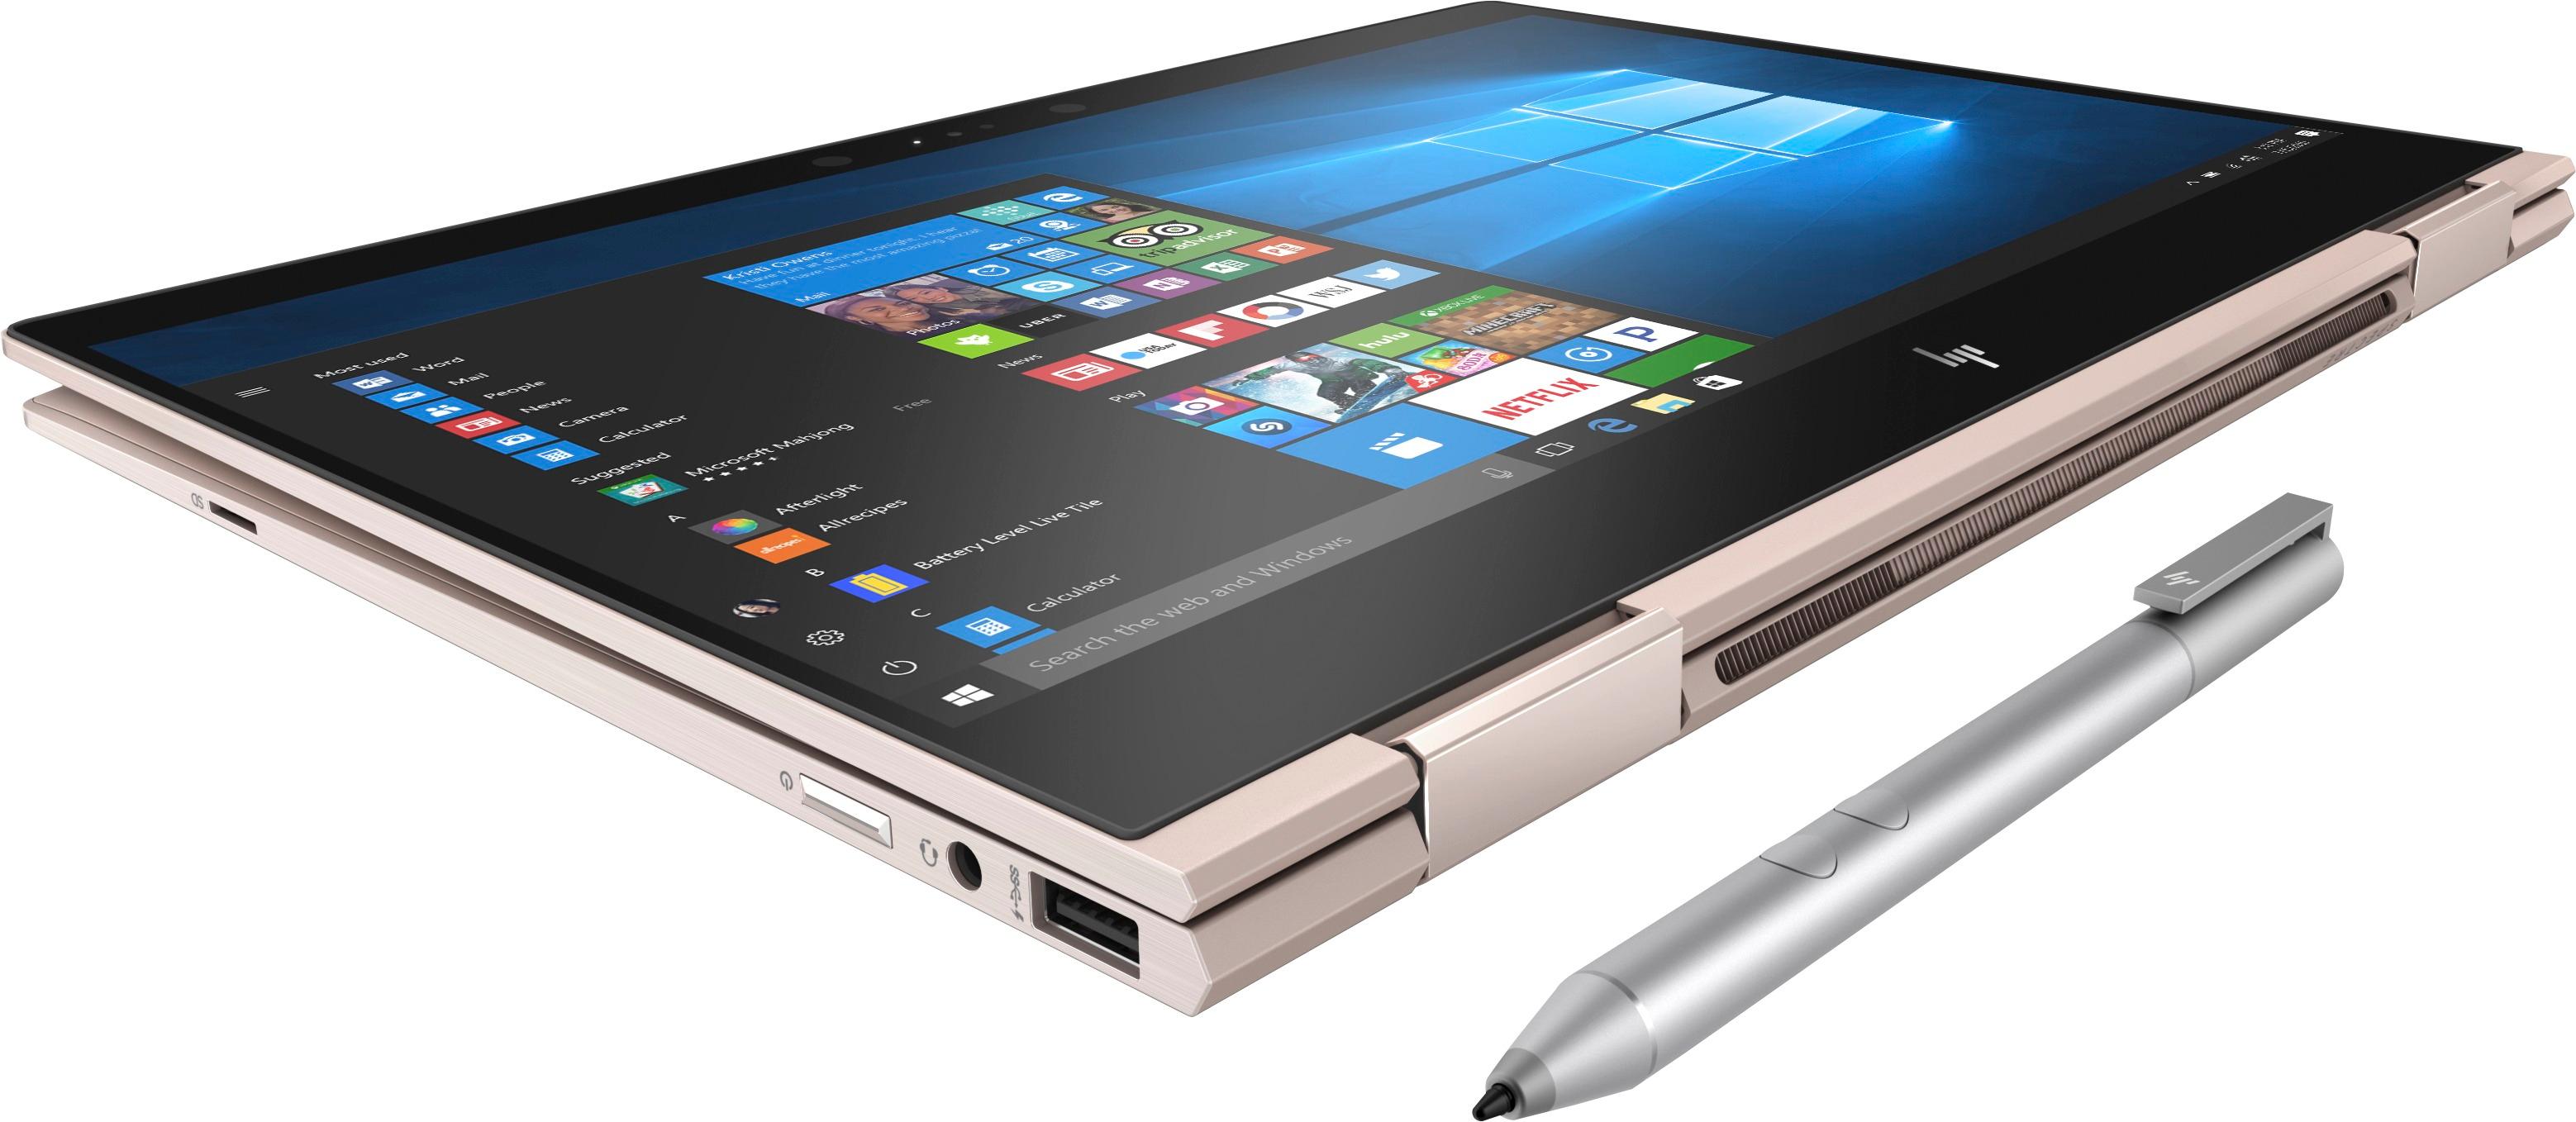 Spectre X360 2-in-1 Touch-Screen Laptop Intel Core I7 16GB Memory 360GB